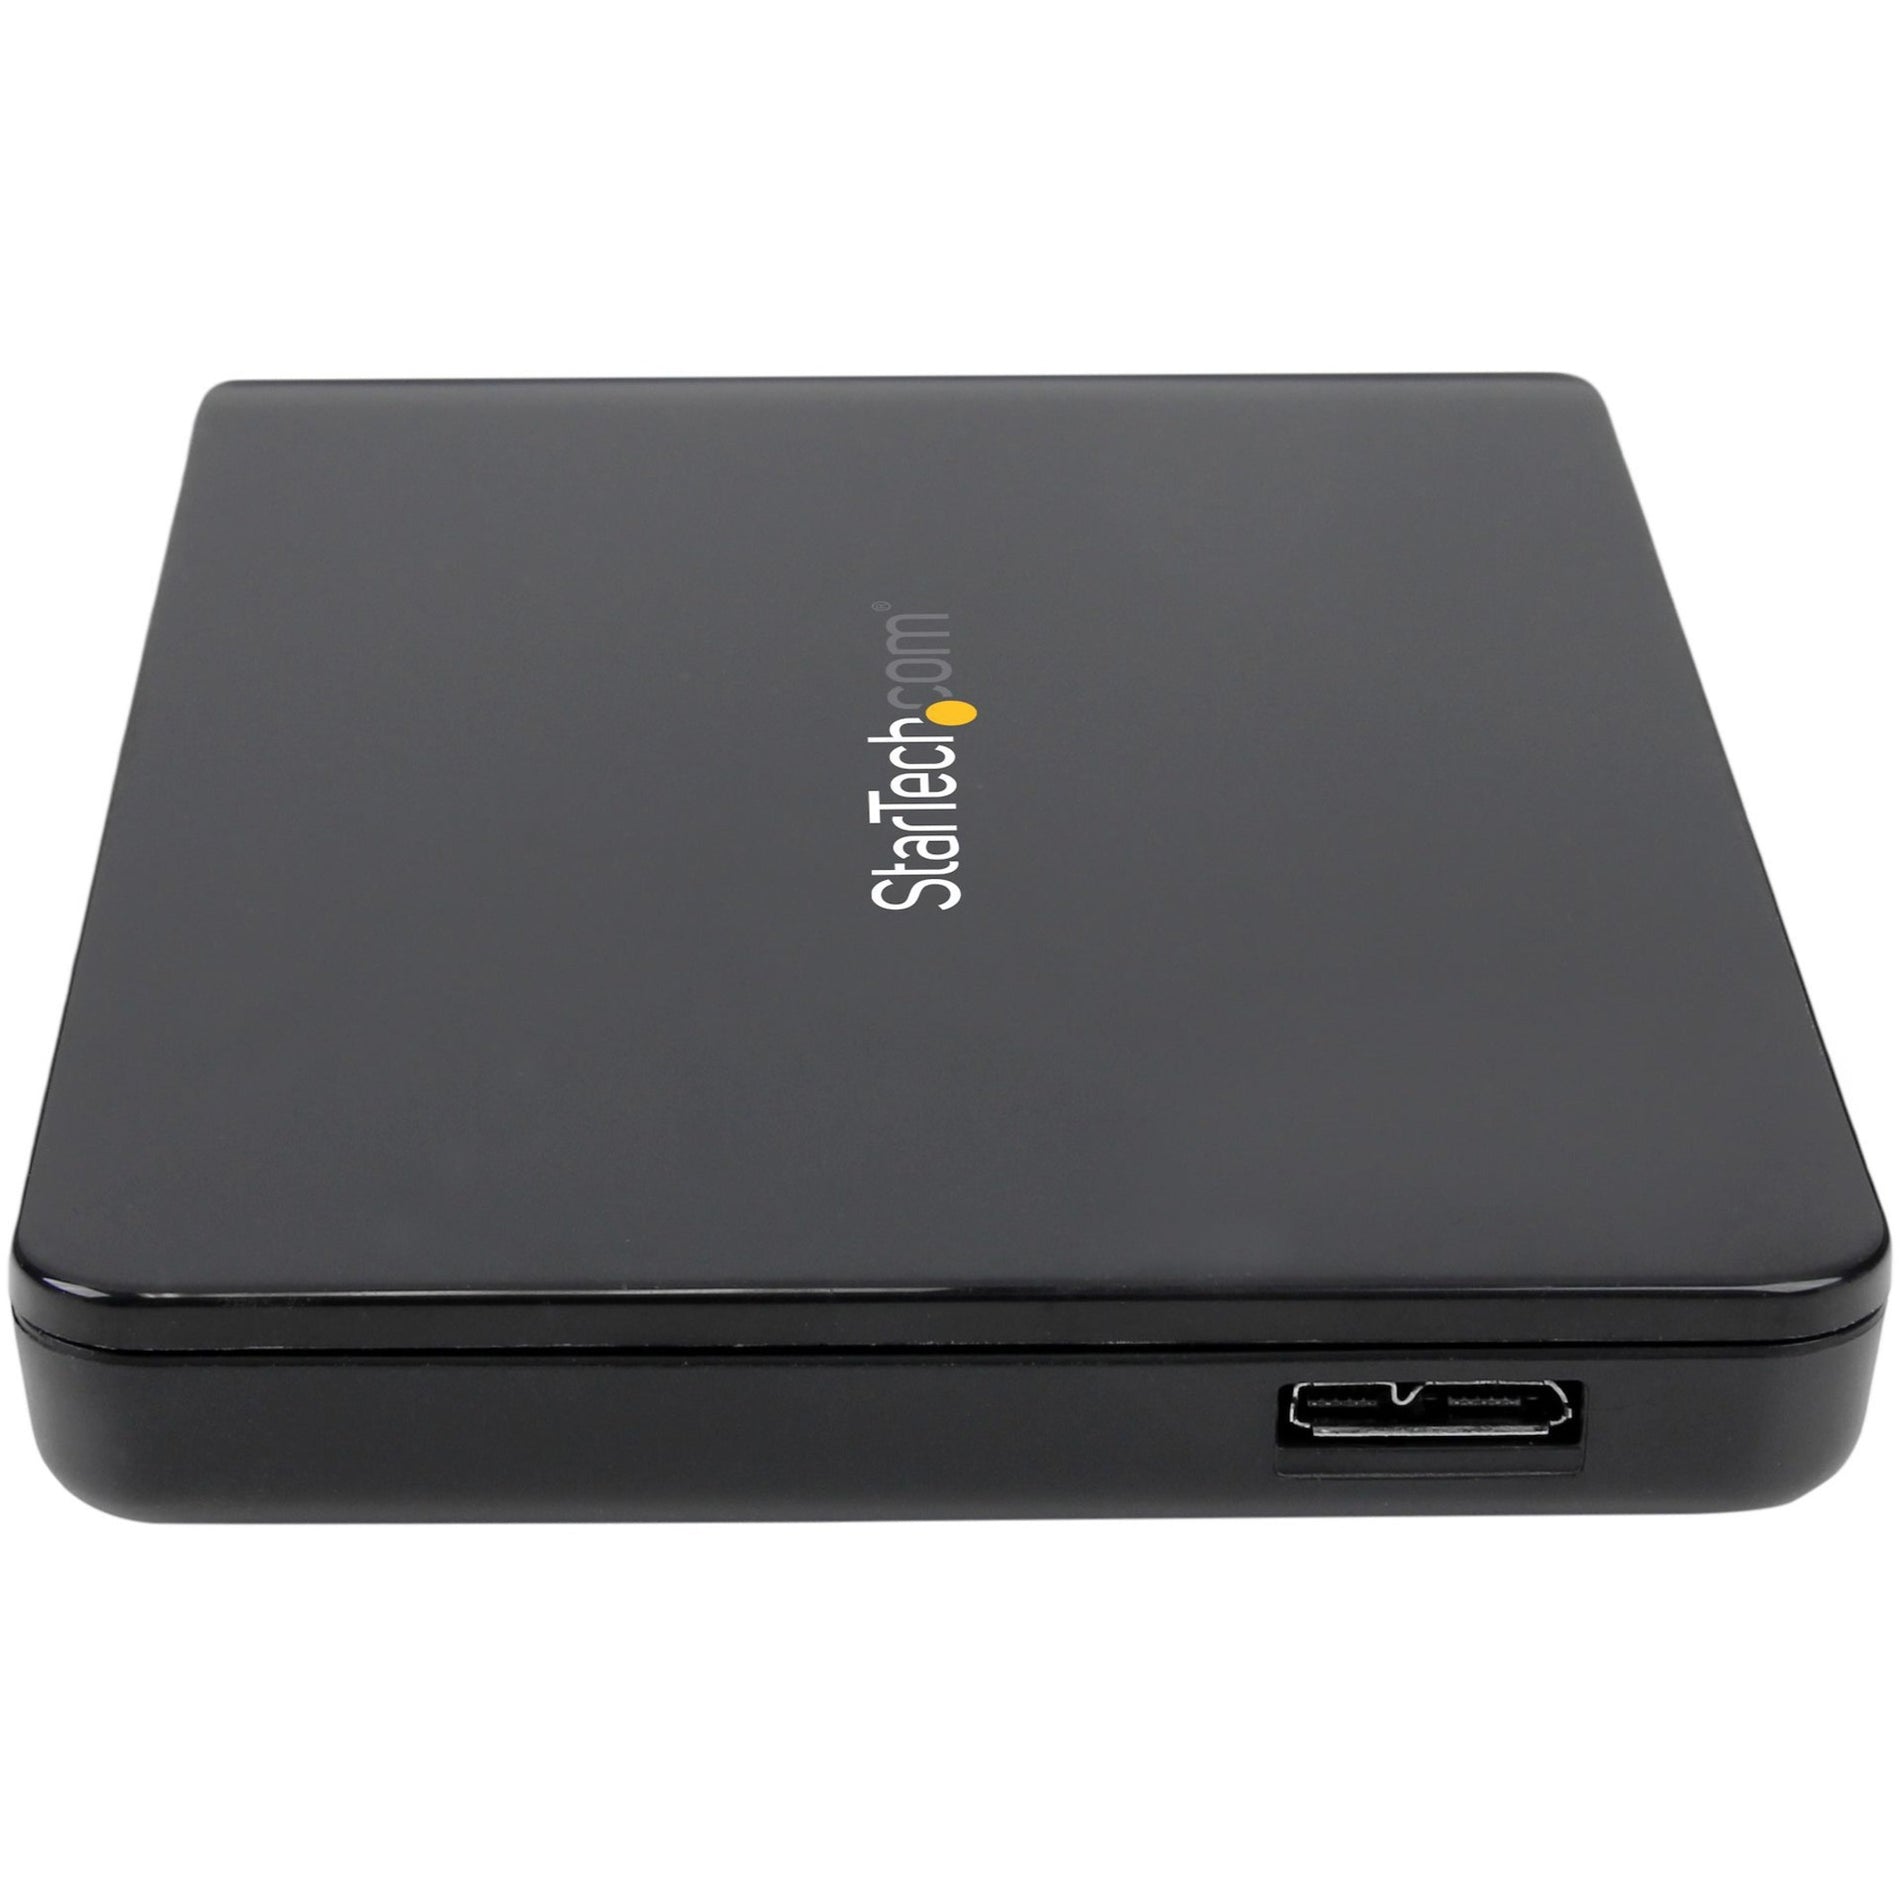 StarTech.com S251BPU313 USB 3.1 Gen 2 (10 Gbps) Tool-free Enclosure for 2.5" SATA Drives, Fast Data Transfer, Easy Installation